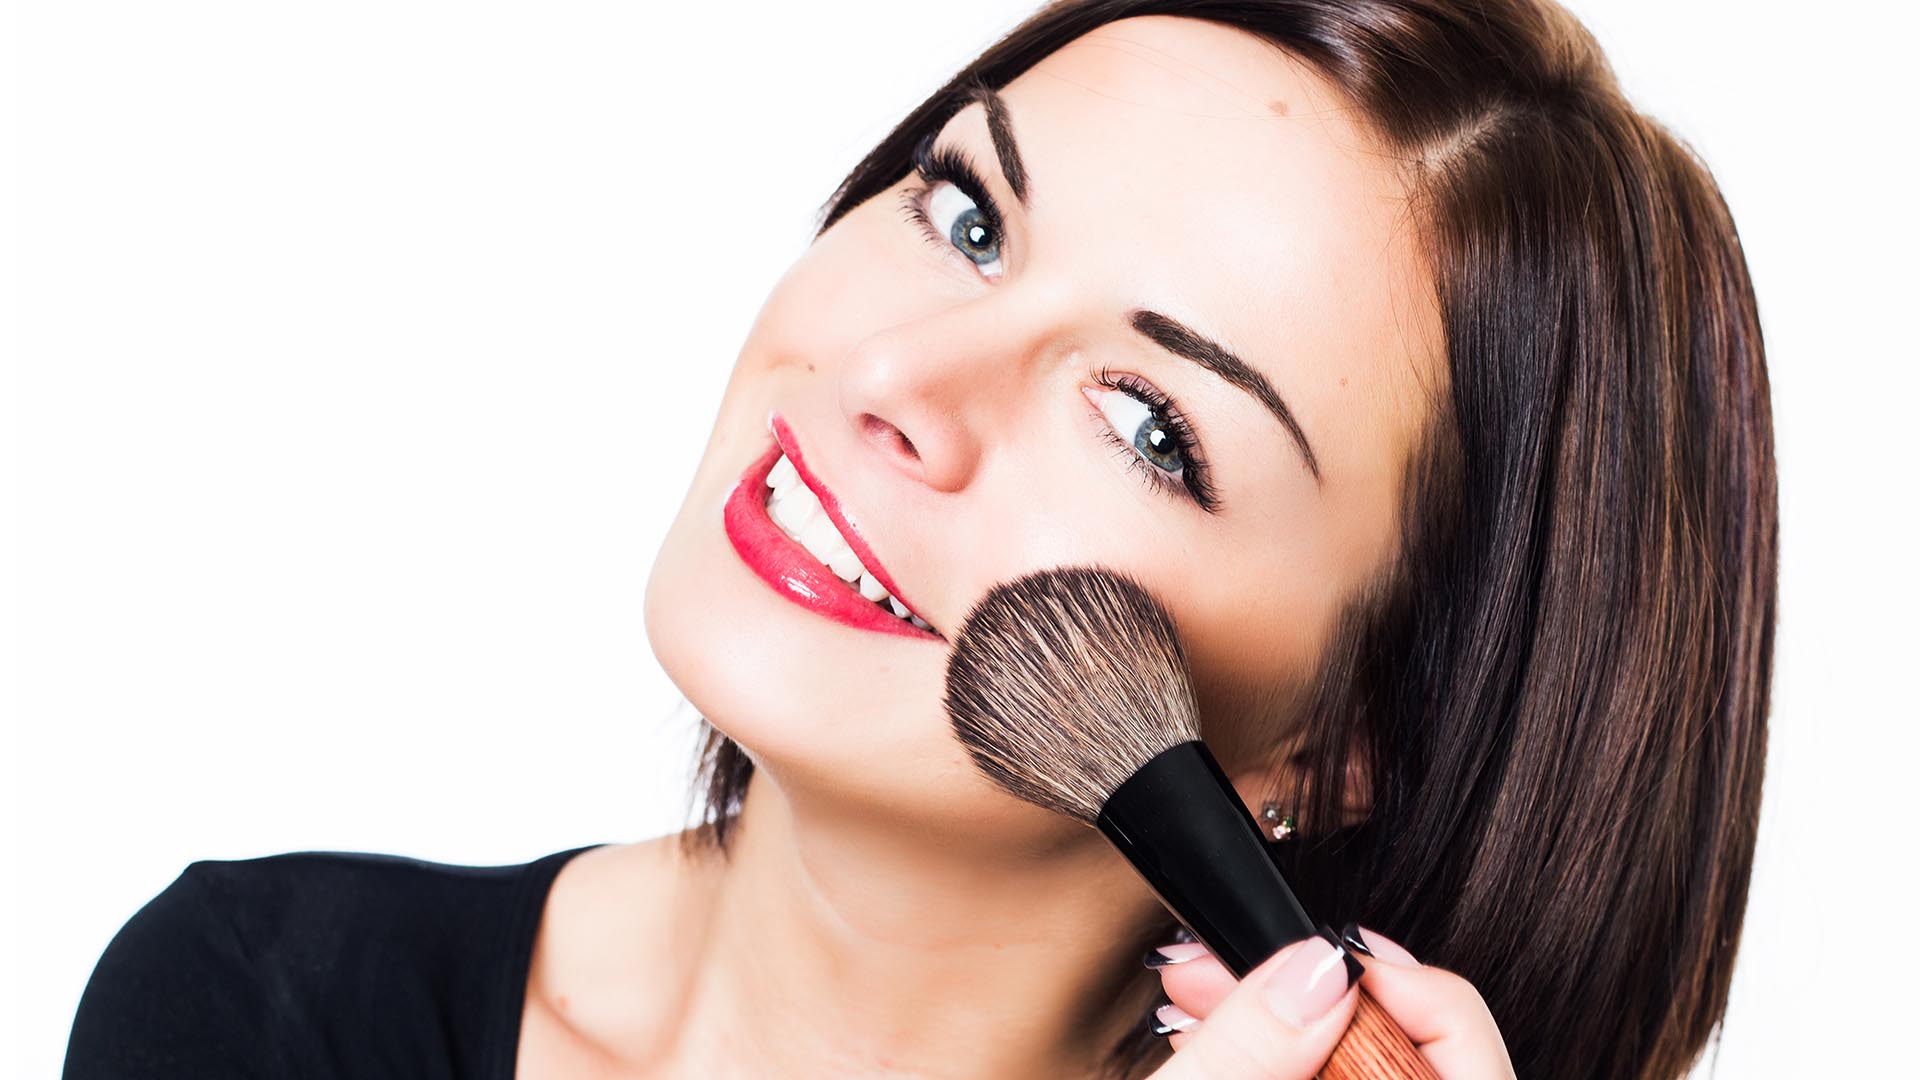 Entérate de cómo hacer un hermoso maquillaje sencillo paso a paso